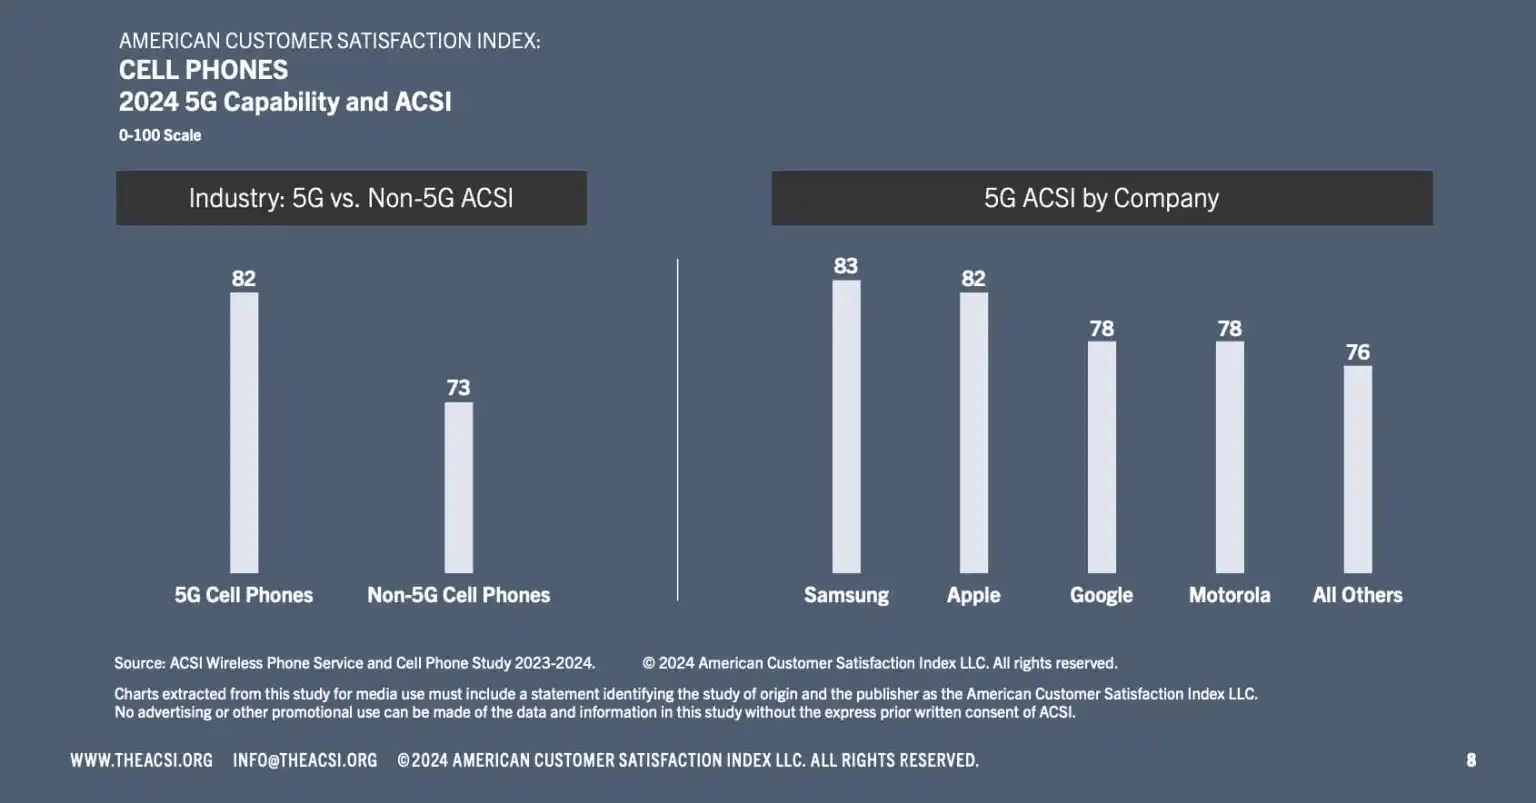 Samsung Ties Apple for Top Smartphone Satisfaction in Latest ACSI Report